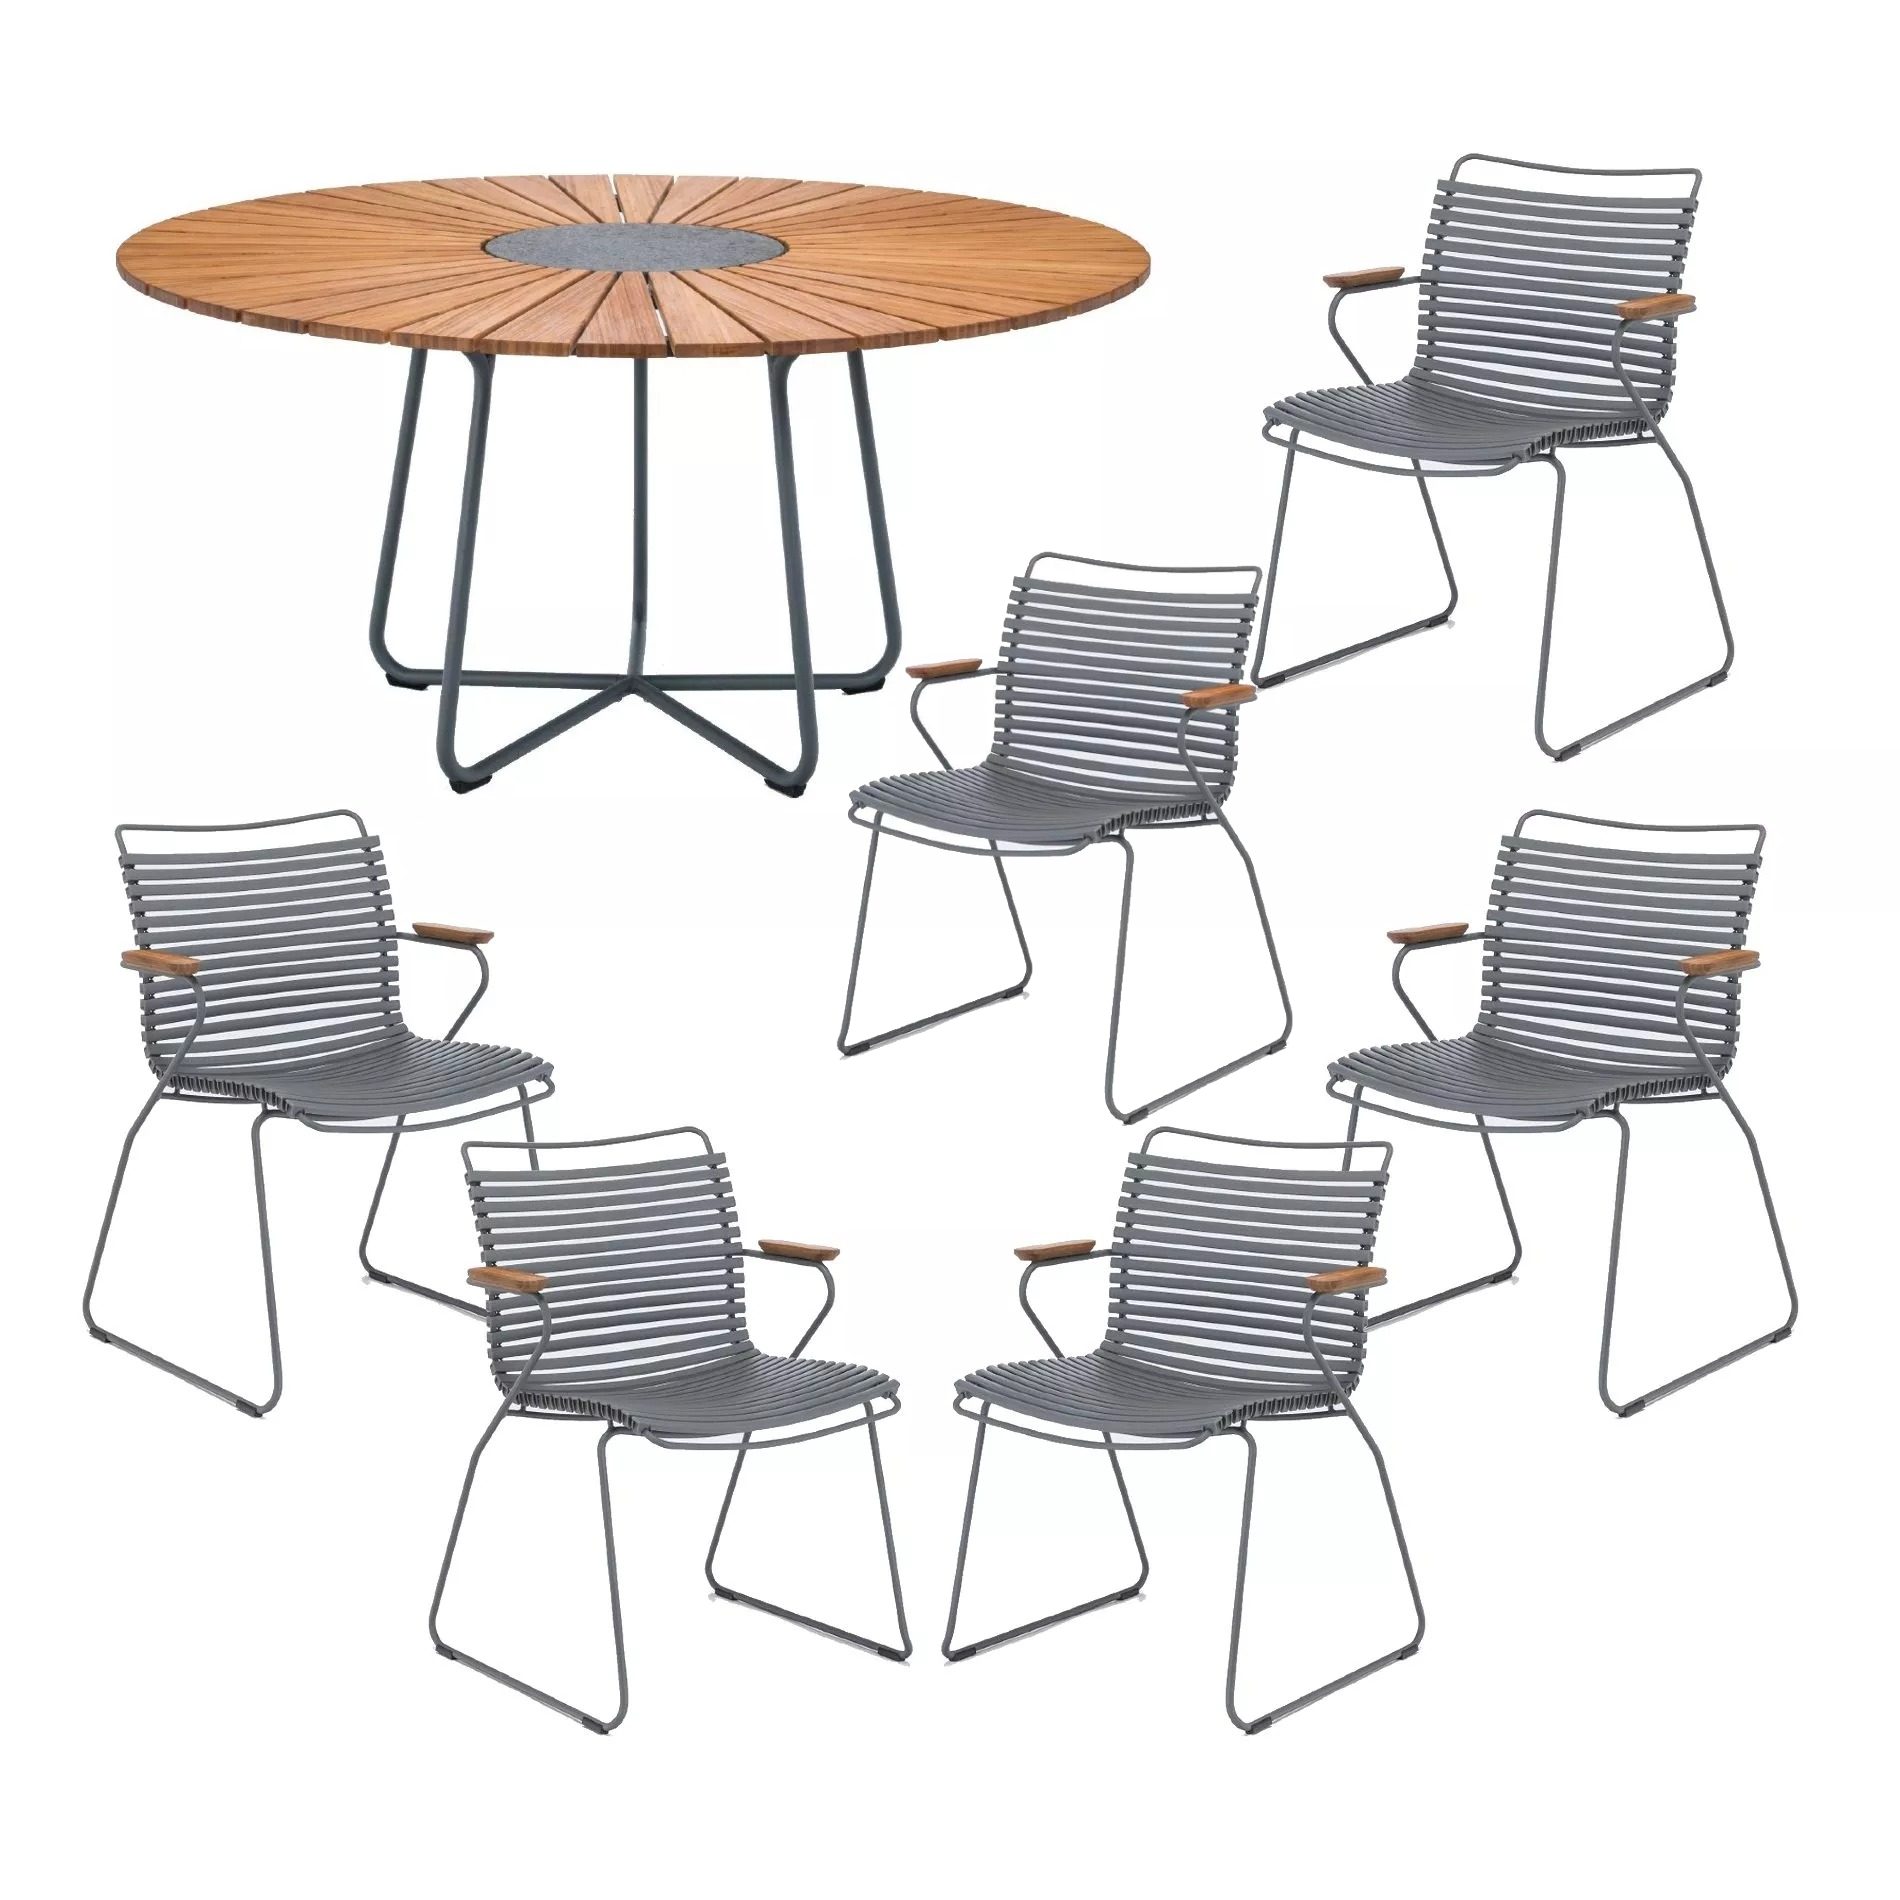 Houe Gartenmöbel-Set mit Tisch "Circle" Ø 150 cm und 6x Stapelsessel "Click", Lamellen dunkelgrau, Tischplatte Bambus